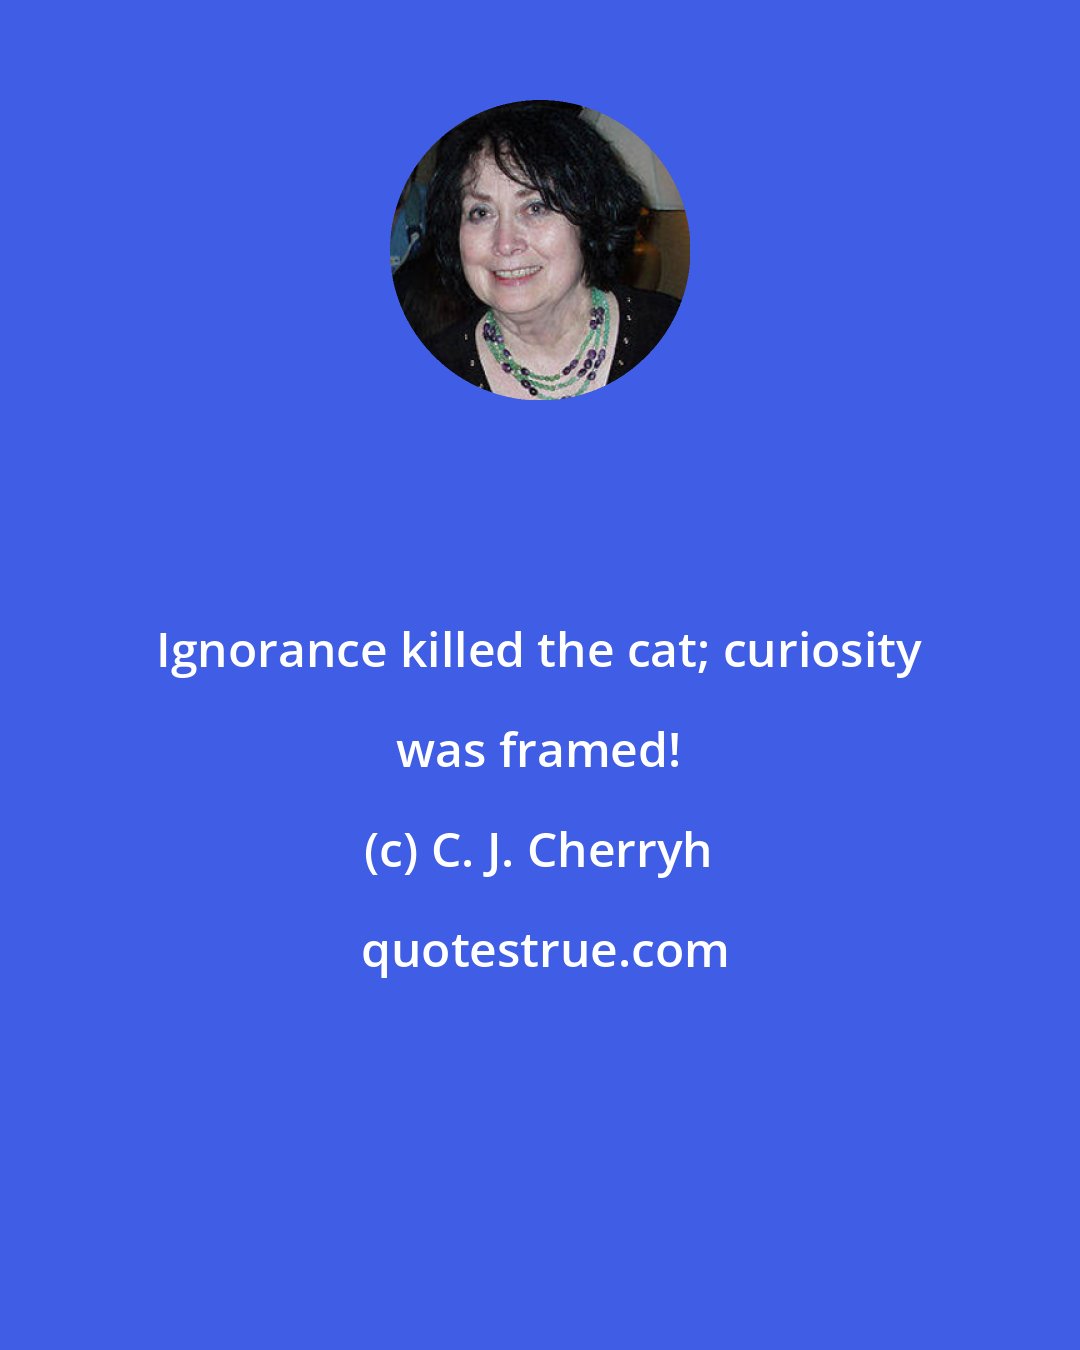 C. J. Cherryh: Ignorance killed the cat; curiosity was framed!